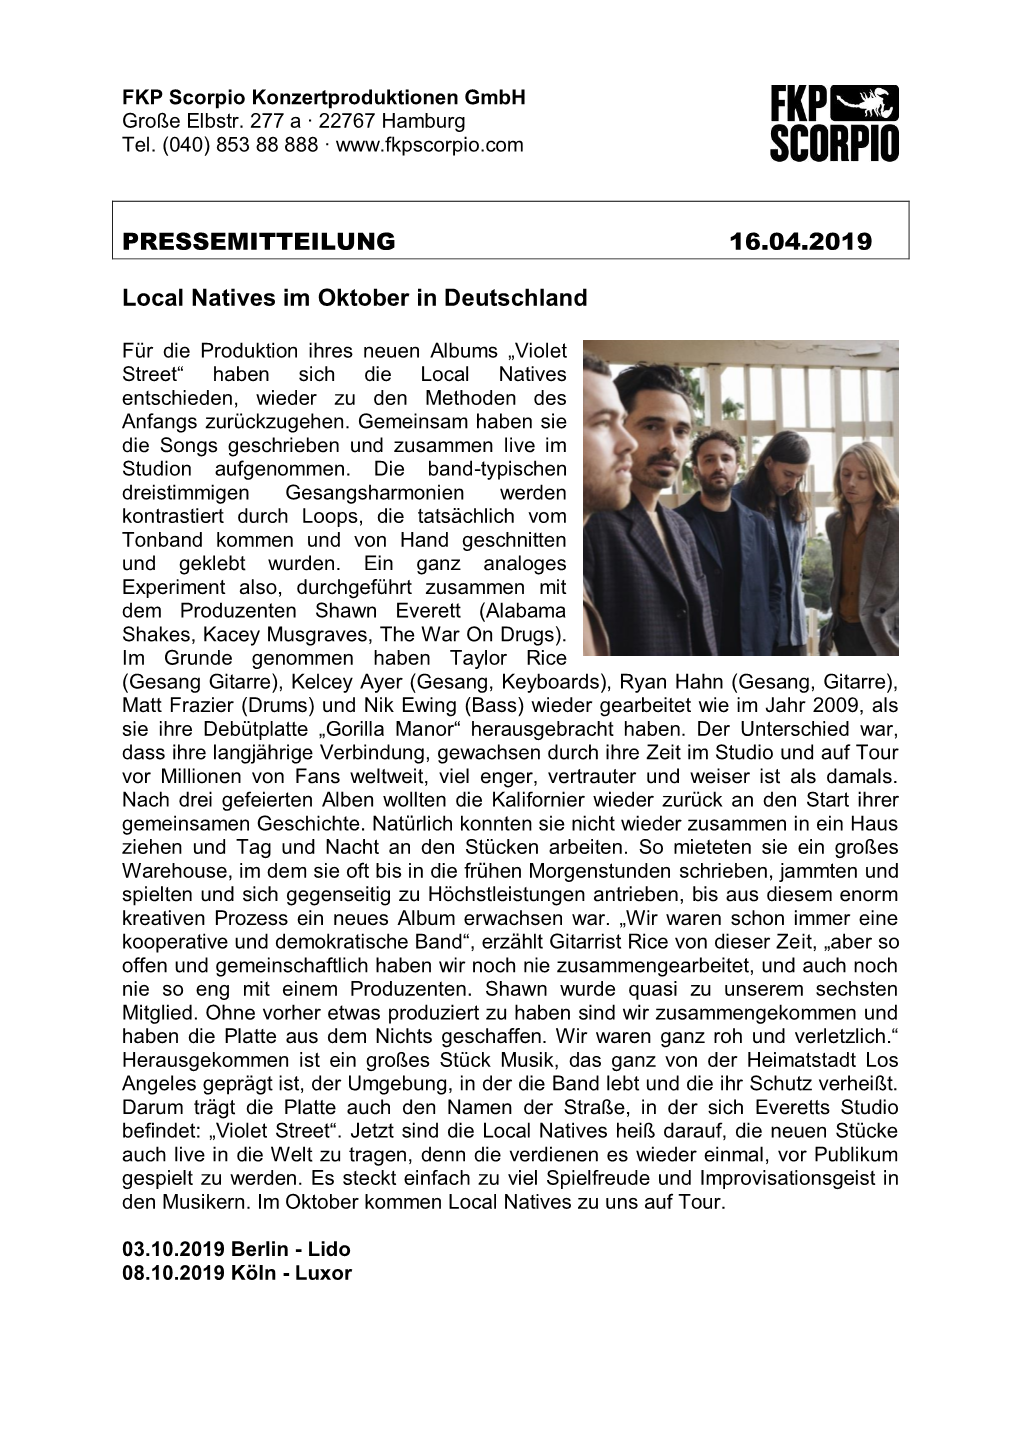 PM LOCAL NATIVES 16.04.2019.PDF PRESSEMATERIAL Download